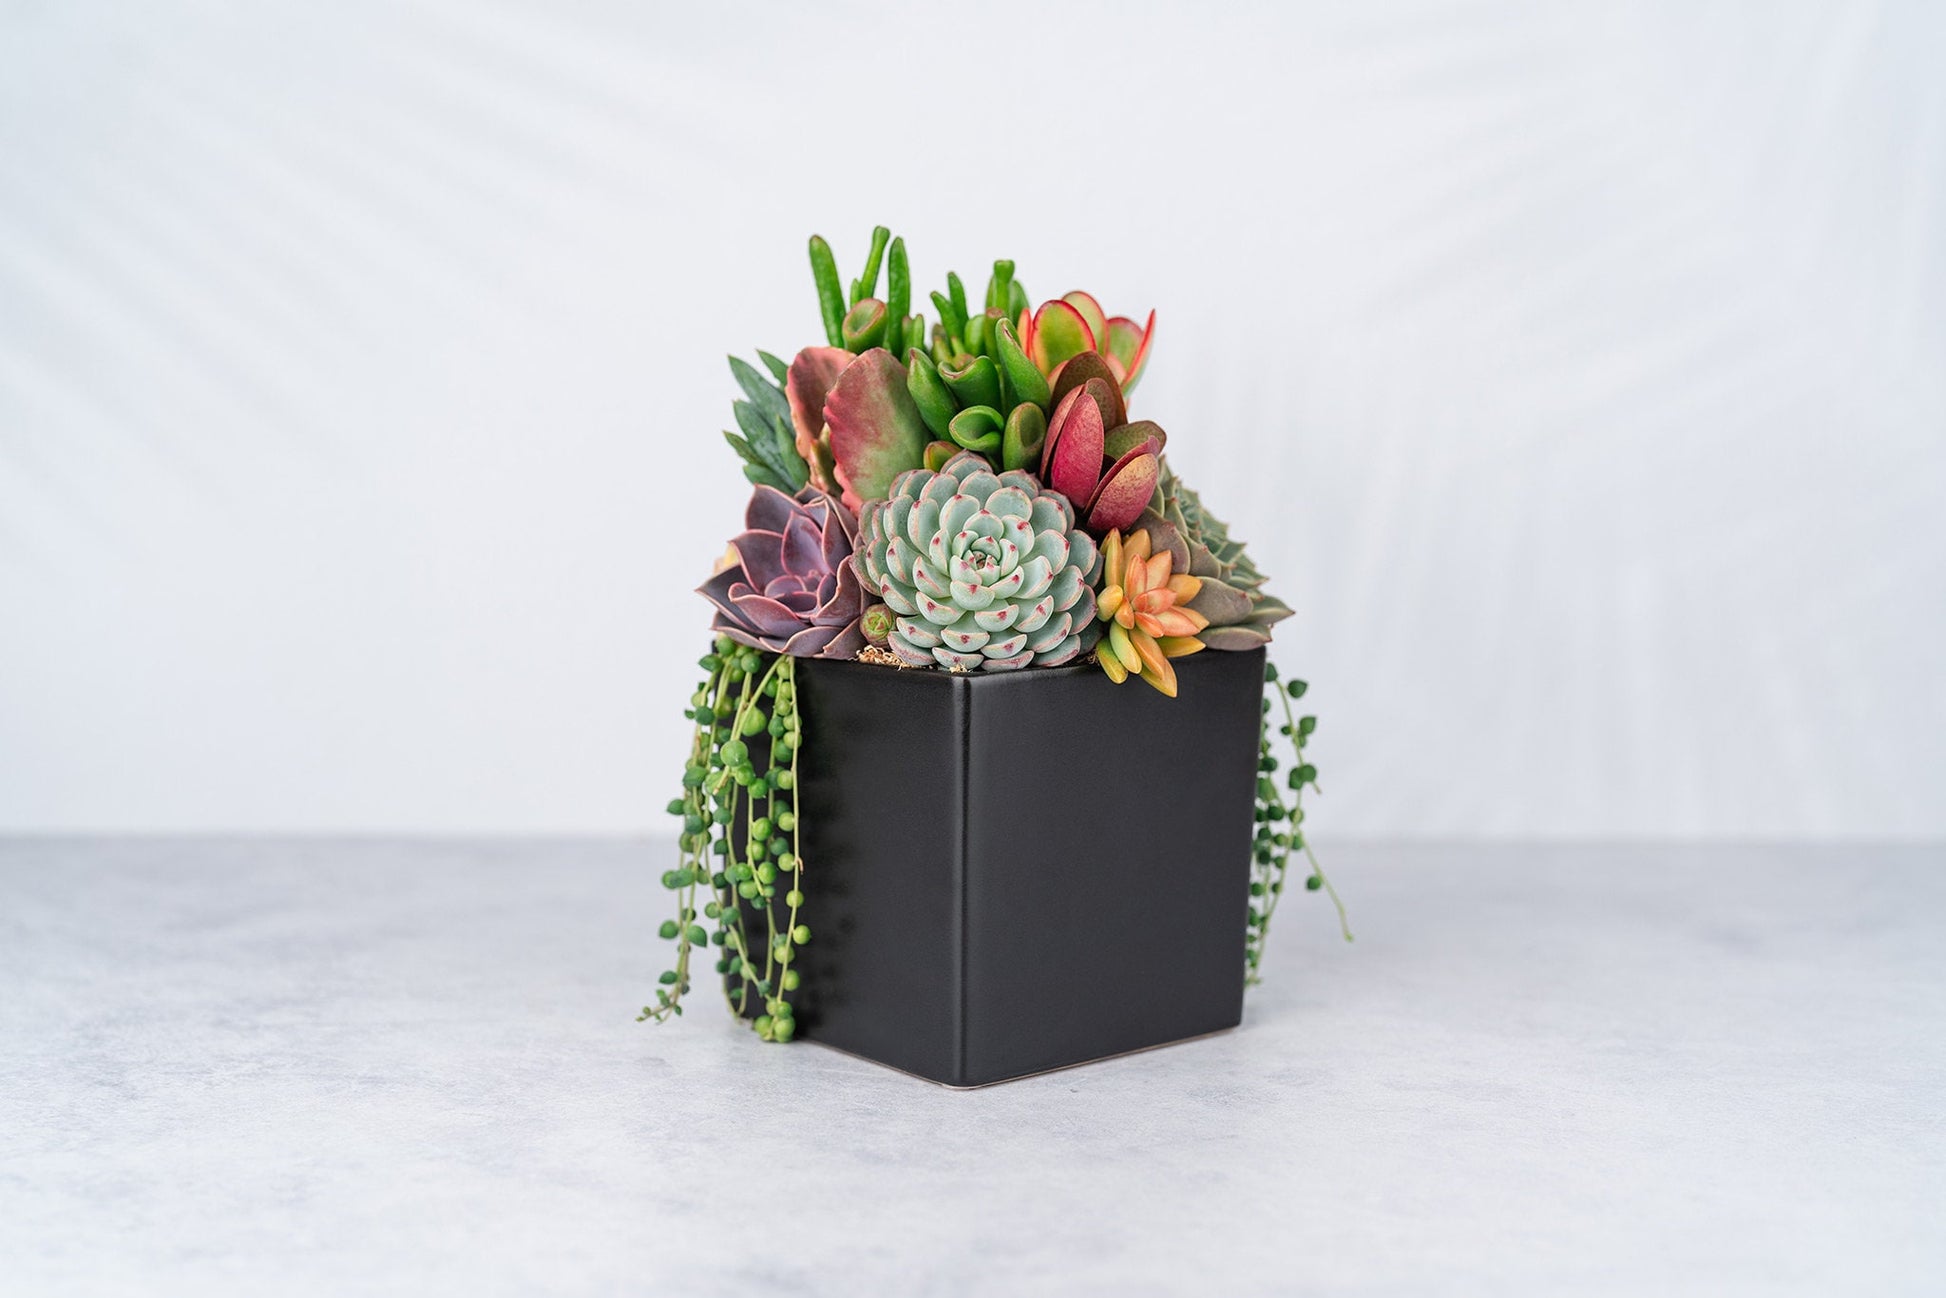 Black Cube Ceramic Succulent Arrangement Planter: Modern Living Succulent Gift or Centerpiece for Weddings & Events